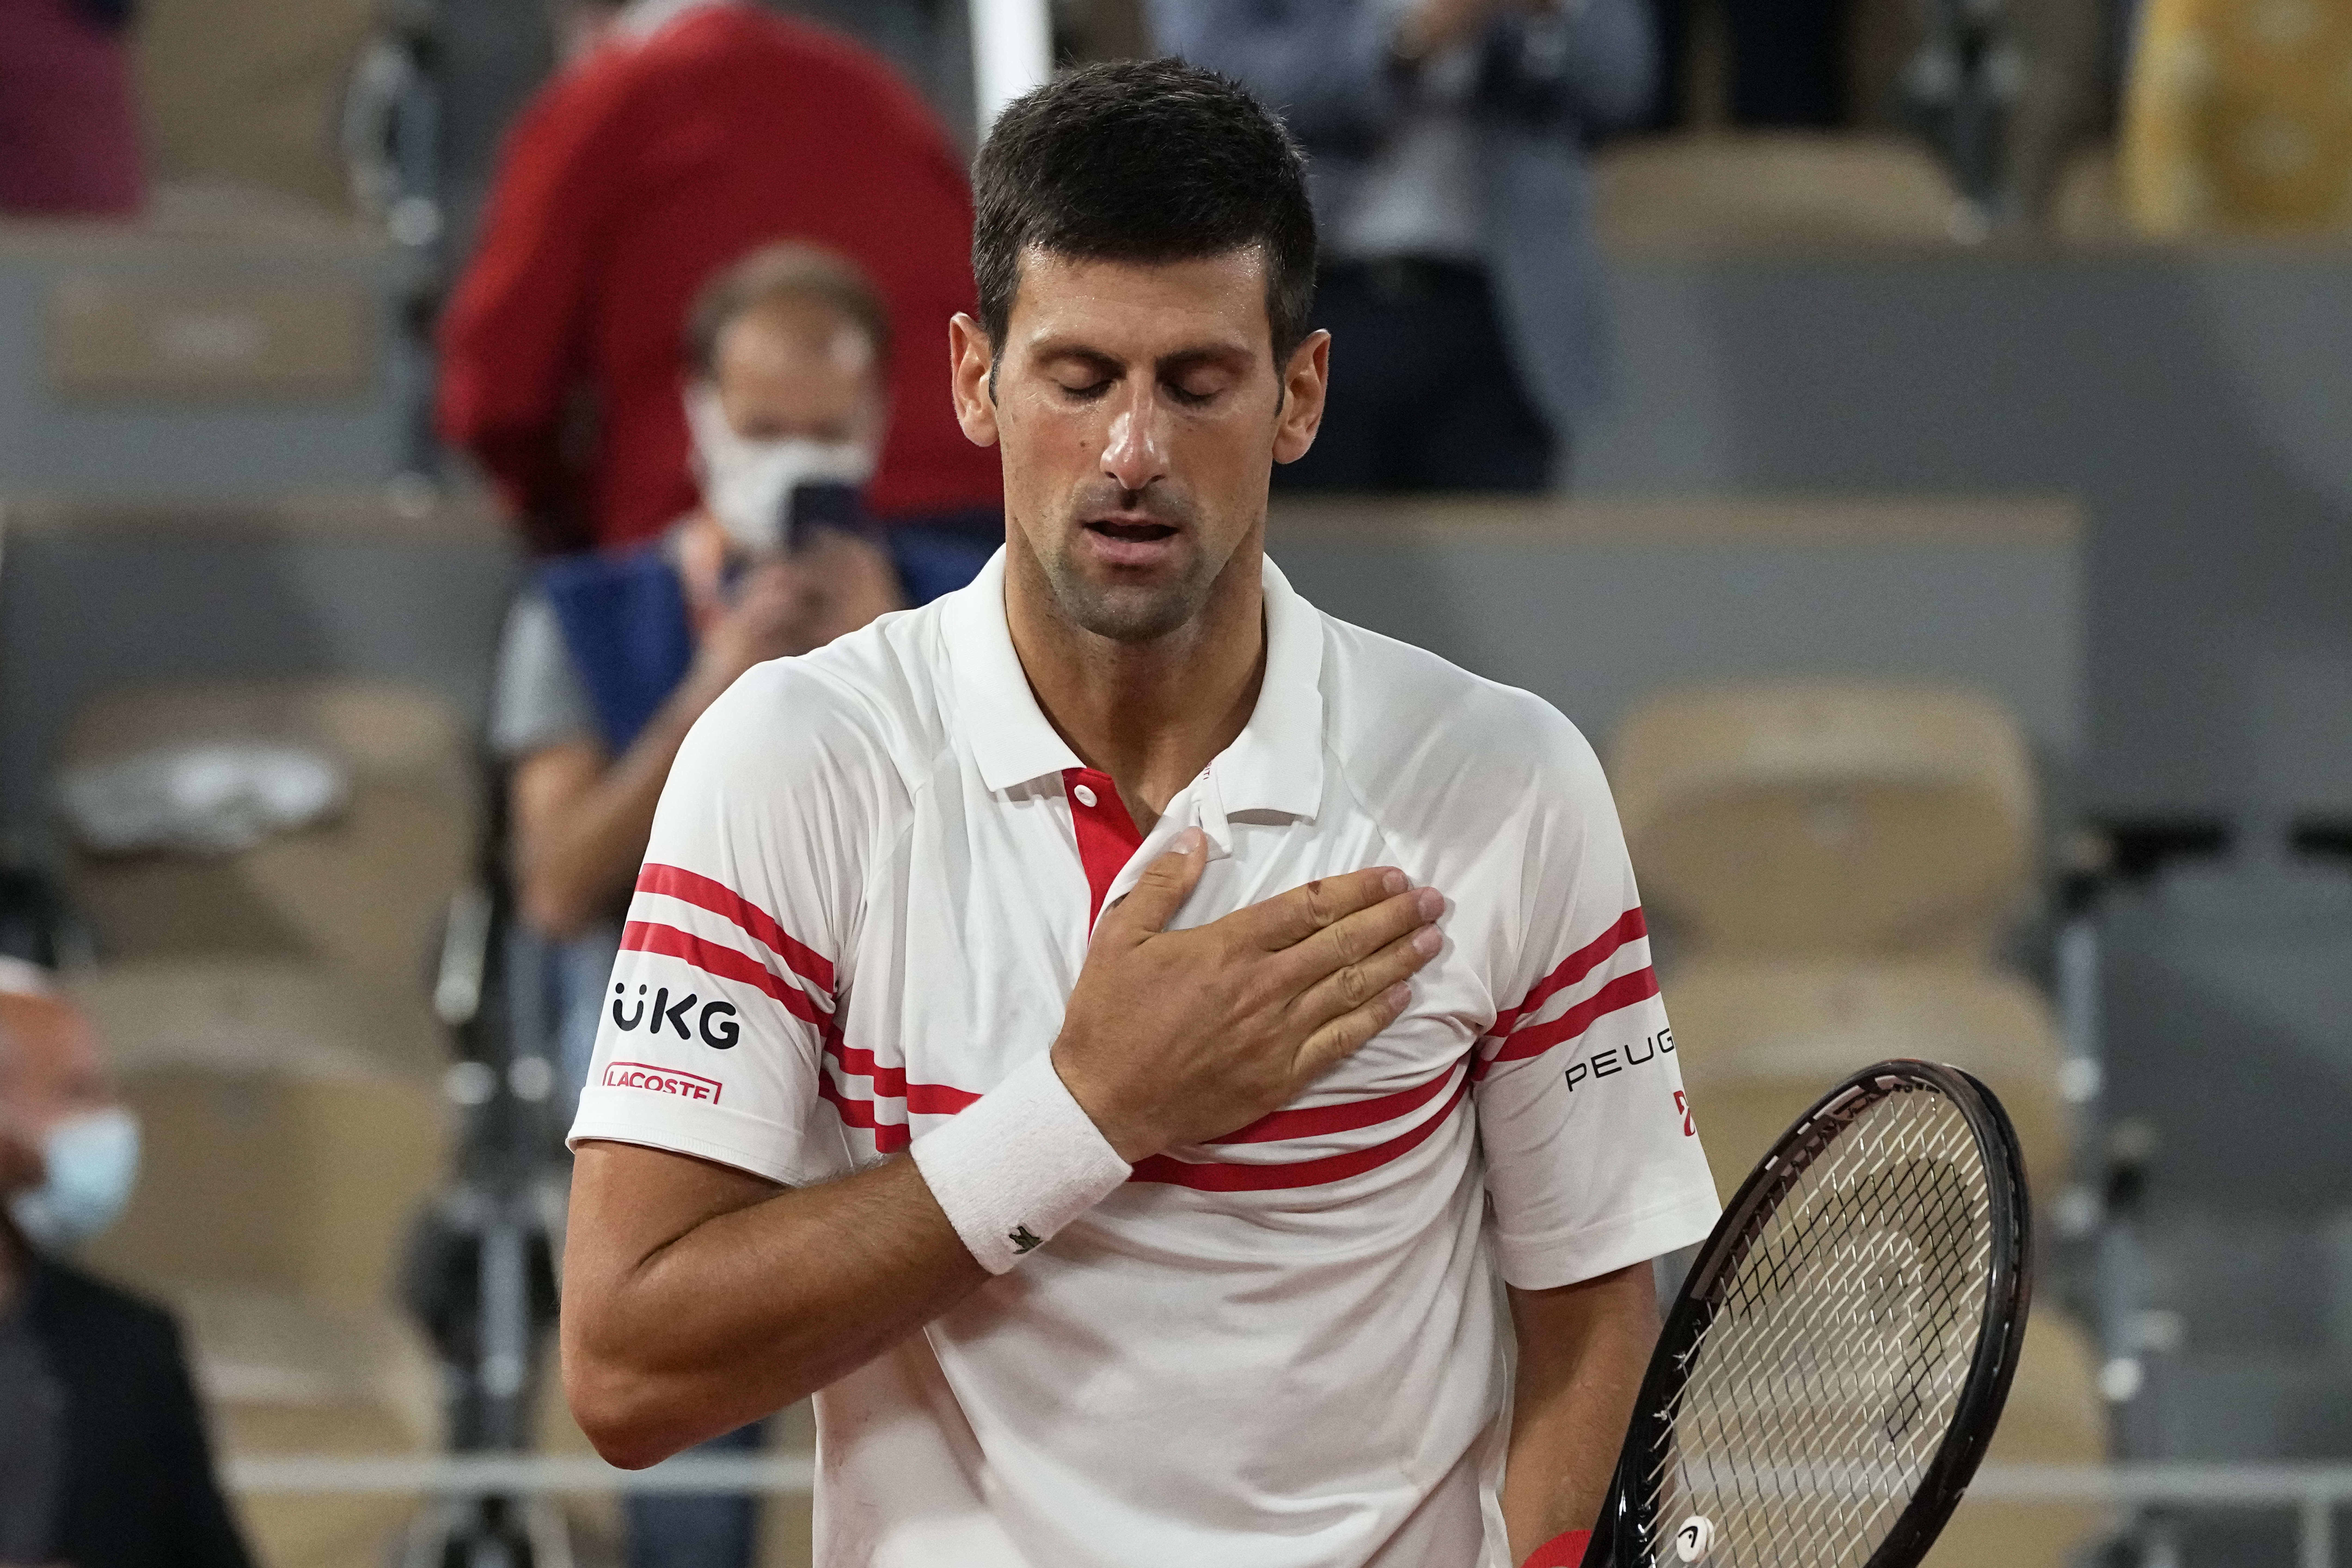 French Open mens singles final 2021 free live stream (6/13/21) How to watch Novak Djokovic vs